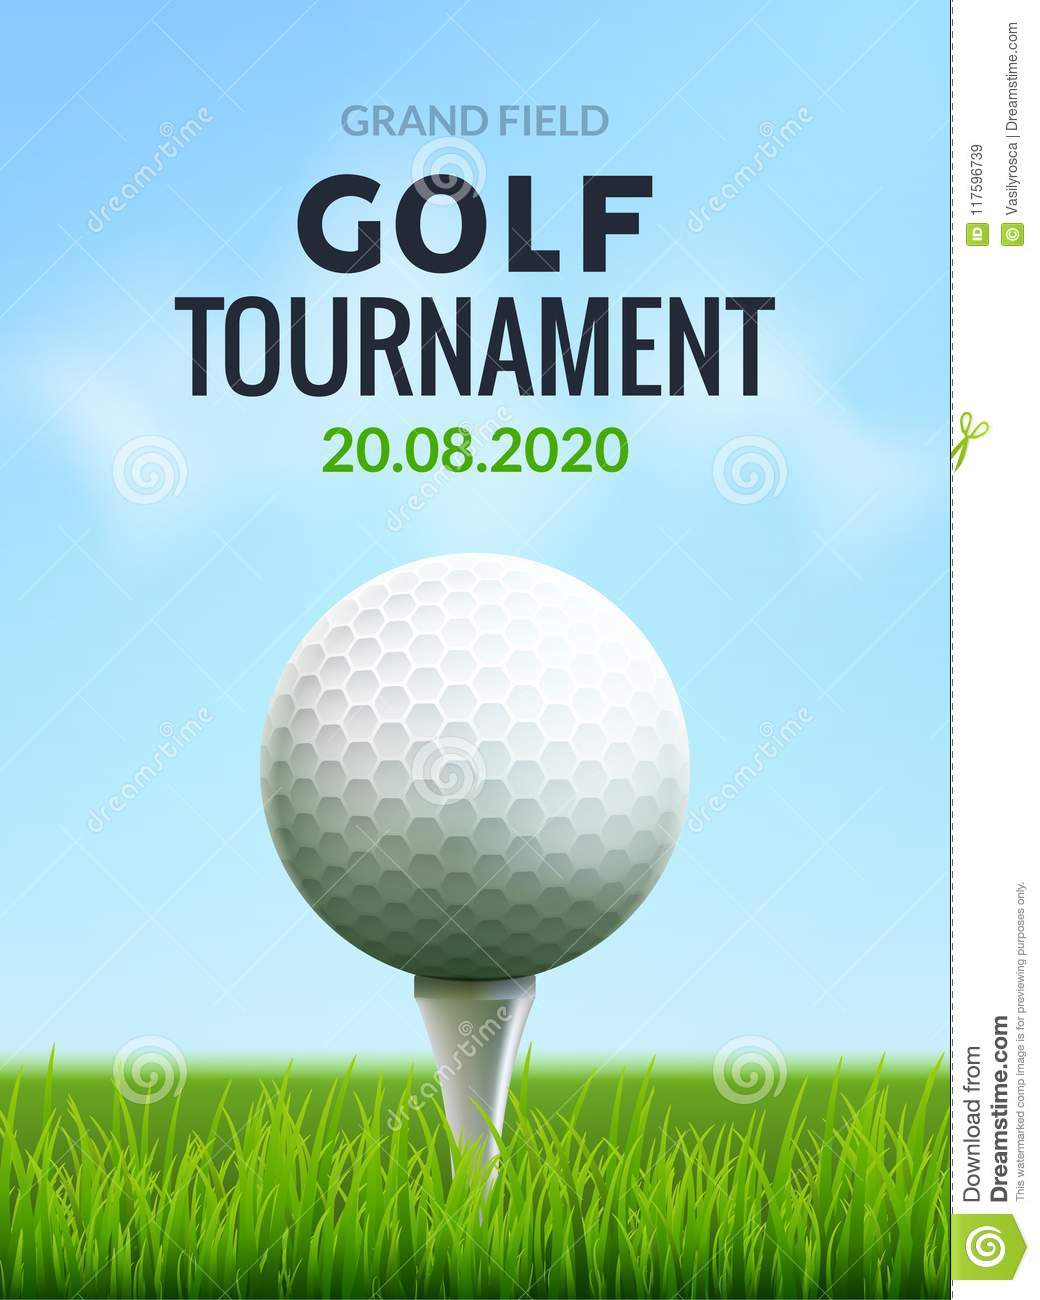 golf tournament flyer template download - Sablon In Golf Tournament Fundraiser Flyer Template Pertaining To Golf Tournament Fundraiser Flyer Template